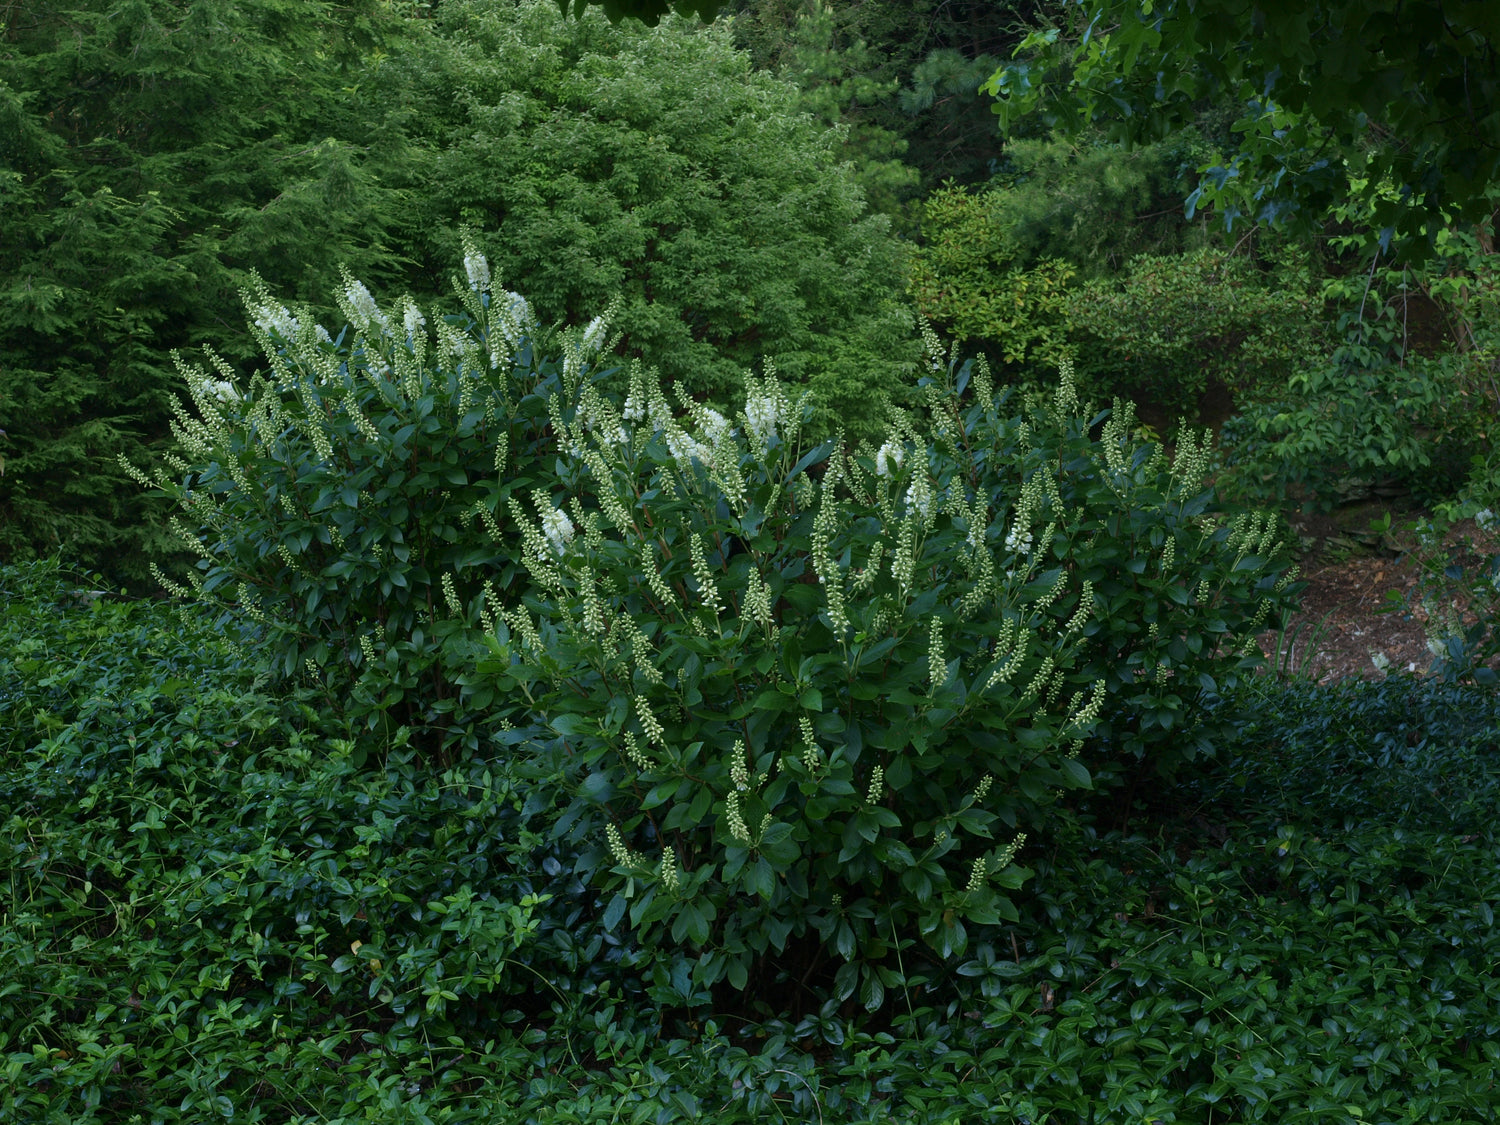 Clethra Sugartina Crystalina growing in a part shade garden